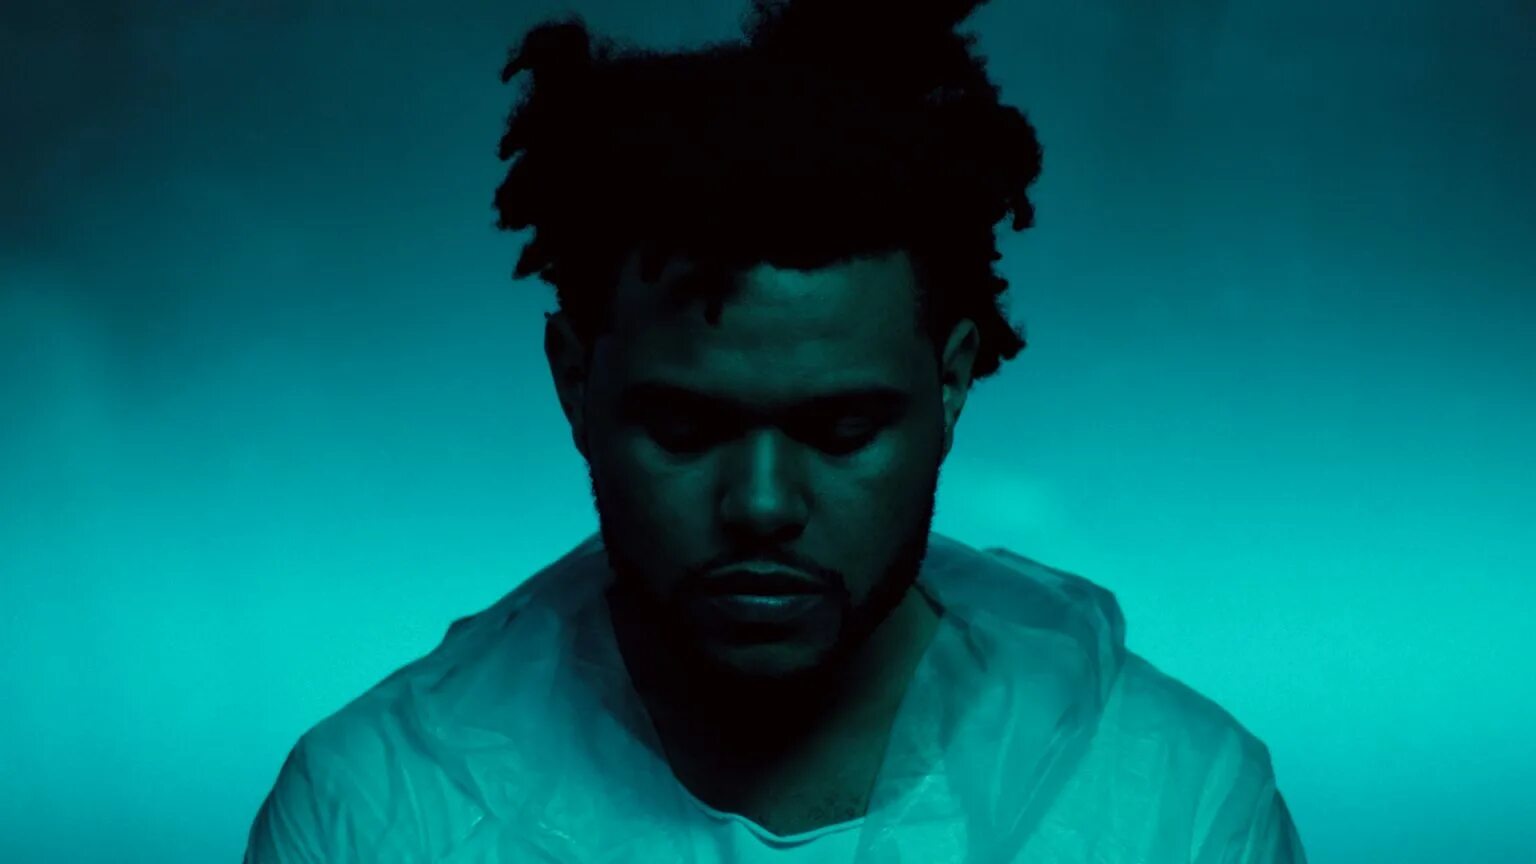 Earned it the weekend. The Weeknd. Weekend. The Weeknd 2015. The Weeknd Drake.